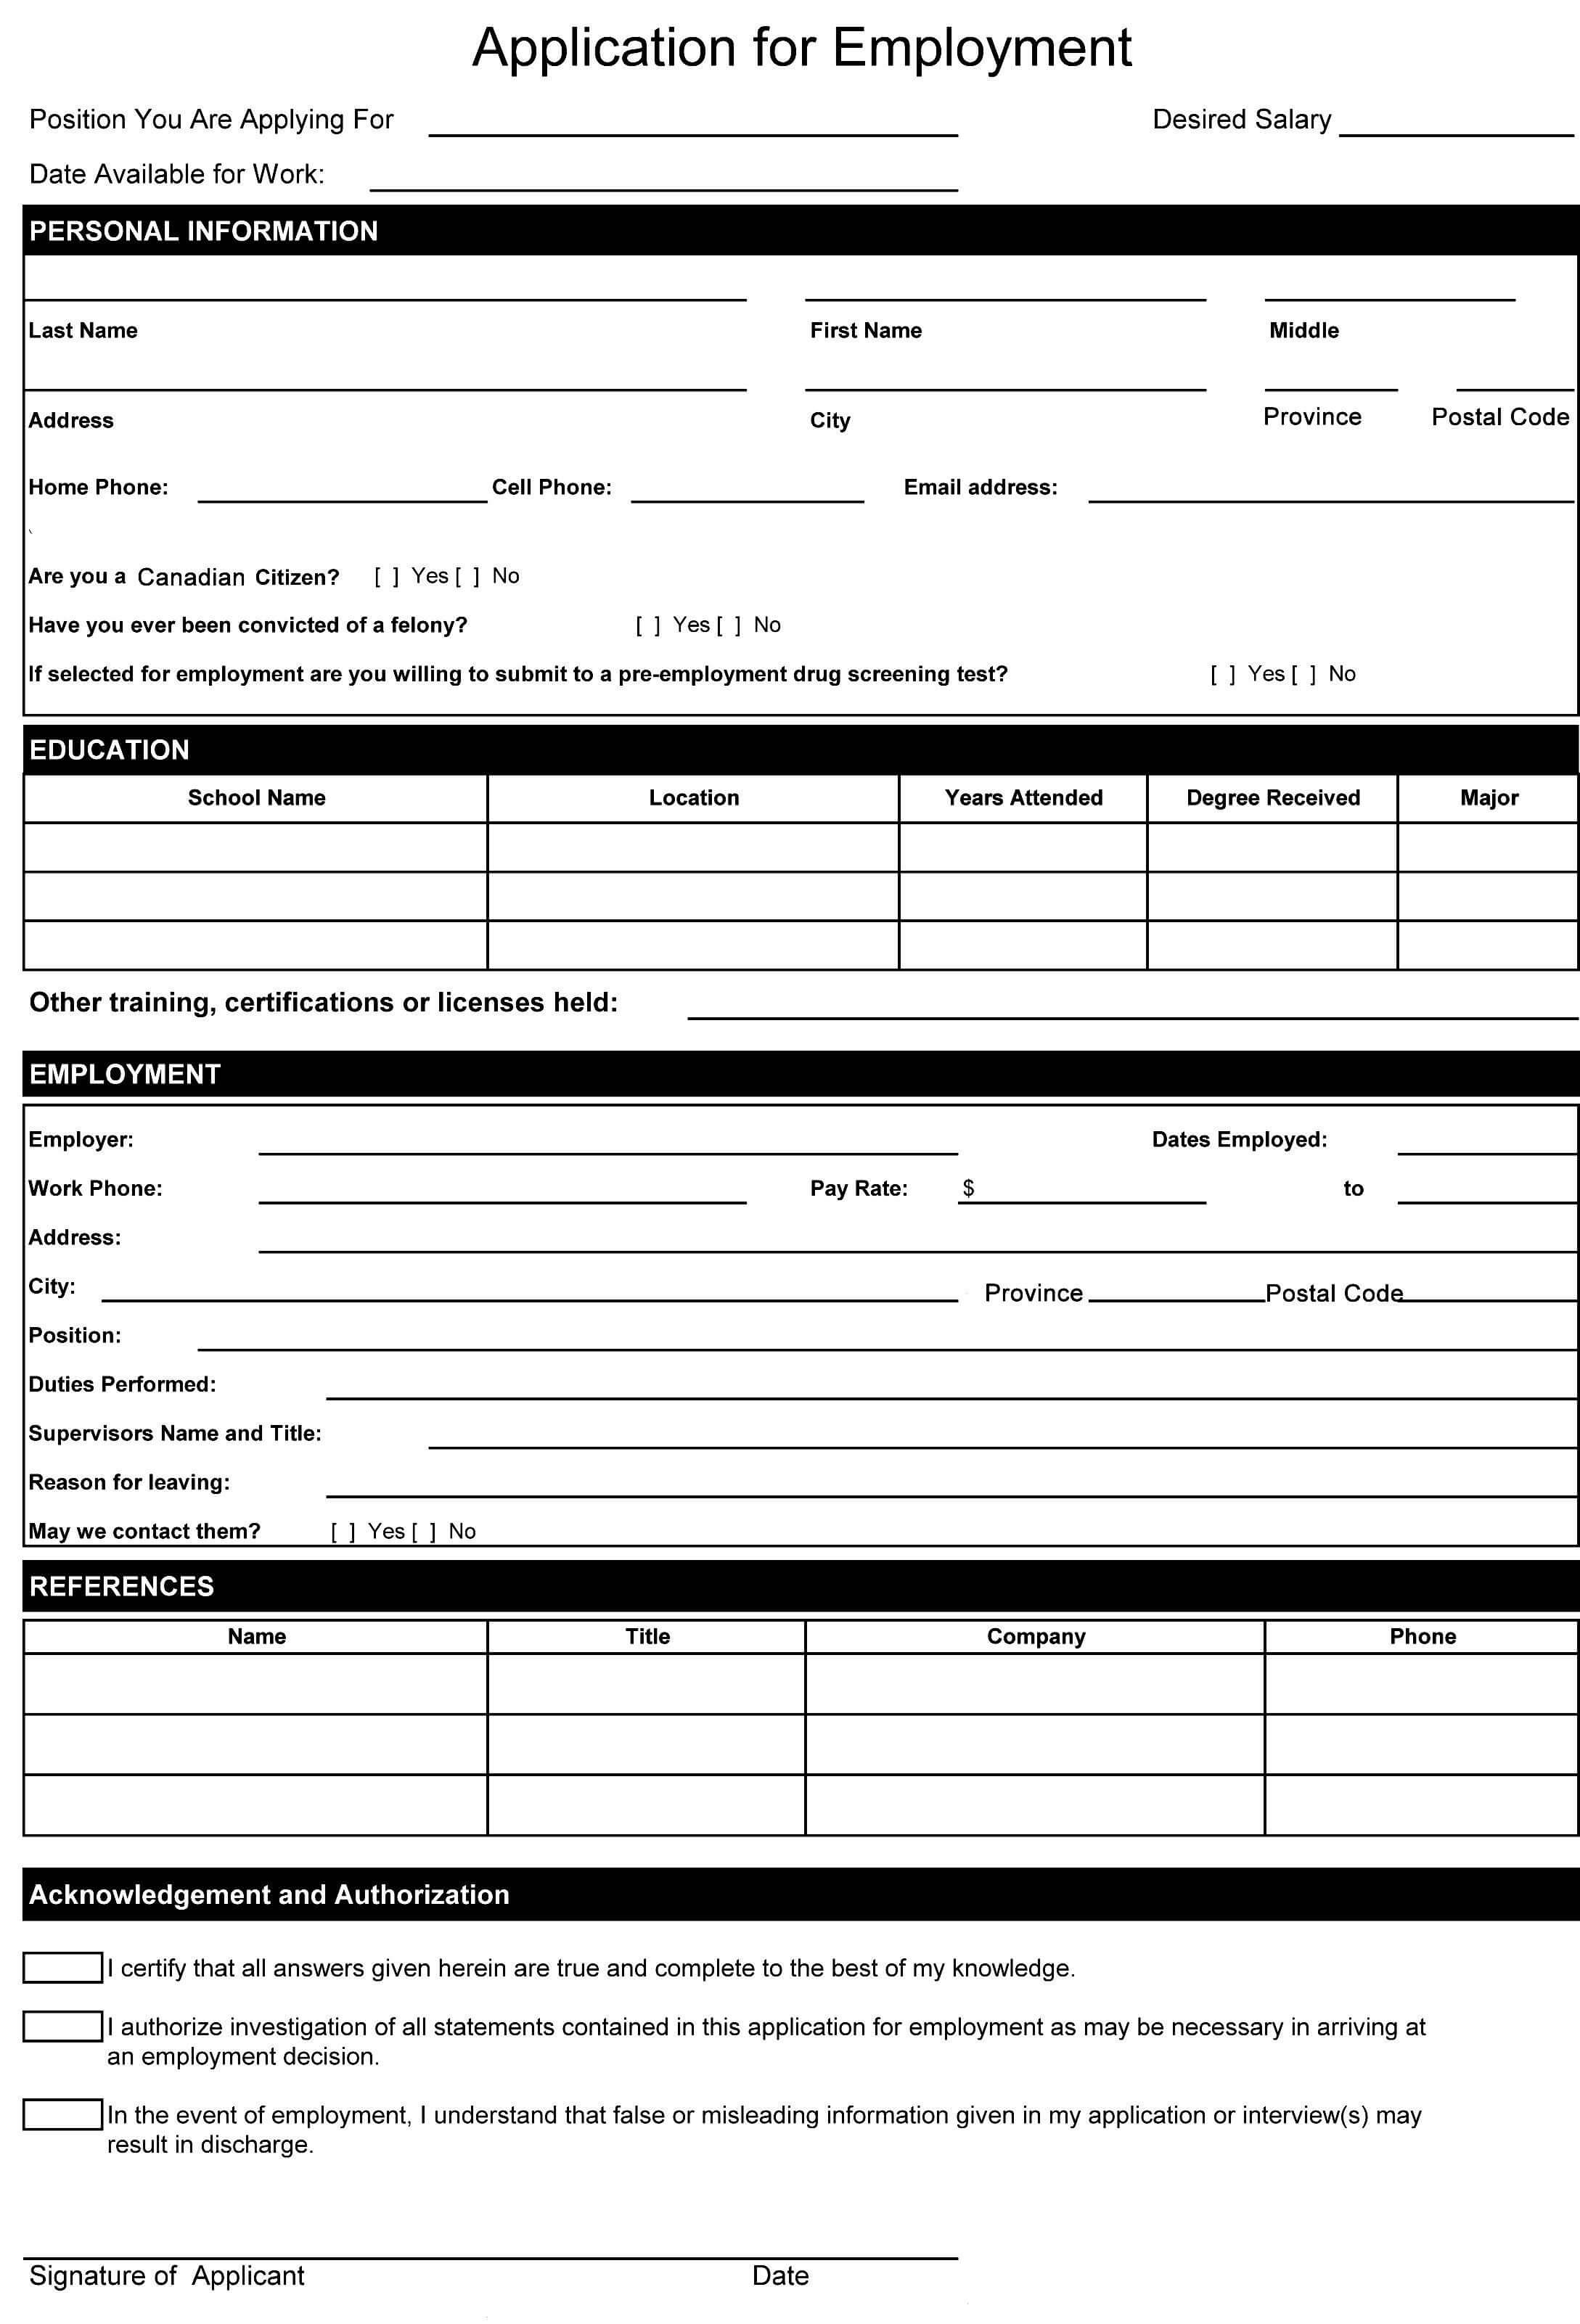 Resume Format Word Document | Job Application Form Intended For Job Application Template Word Document